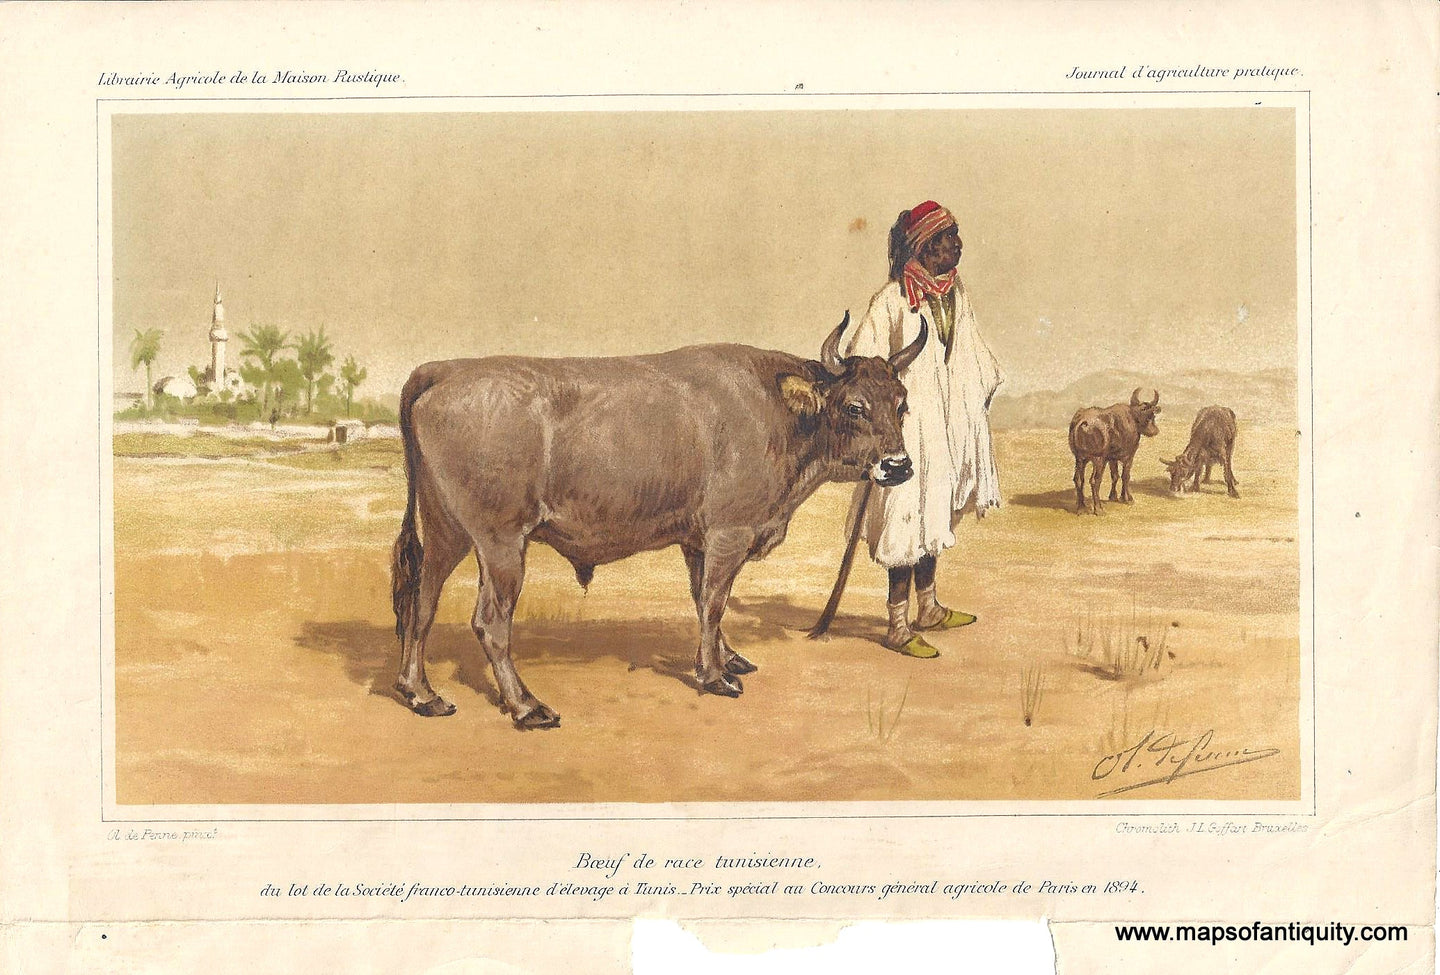 Genuine-Antique-Print-Boeuf-de-race-tunisienne-Tunisian-Bull--1895-Ol-de-Penne-Goffart-Maps-Of-Antiquity